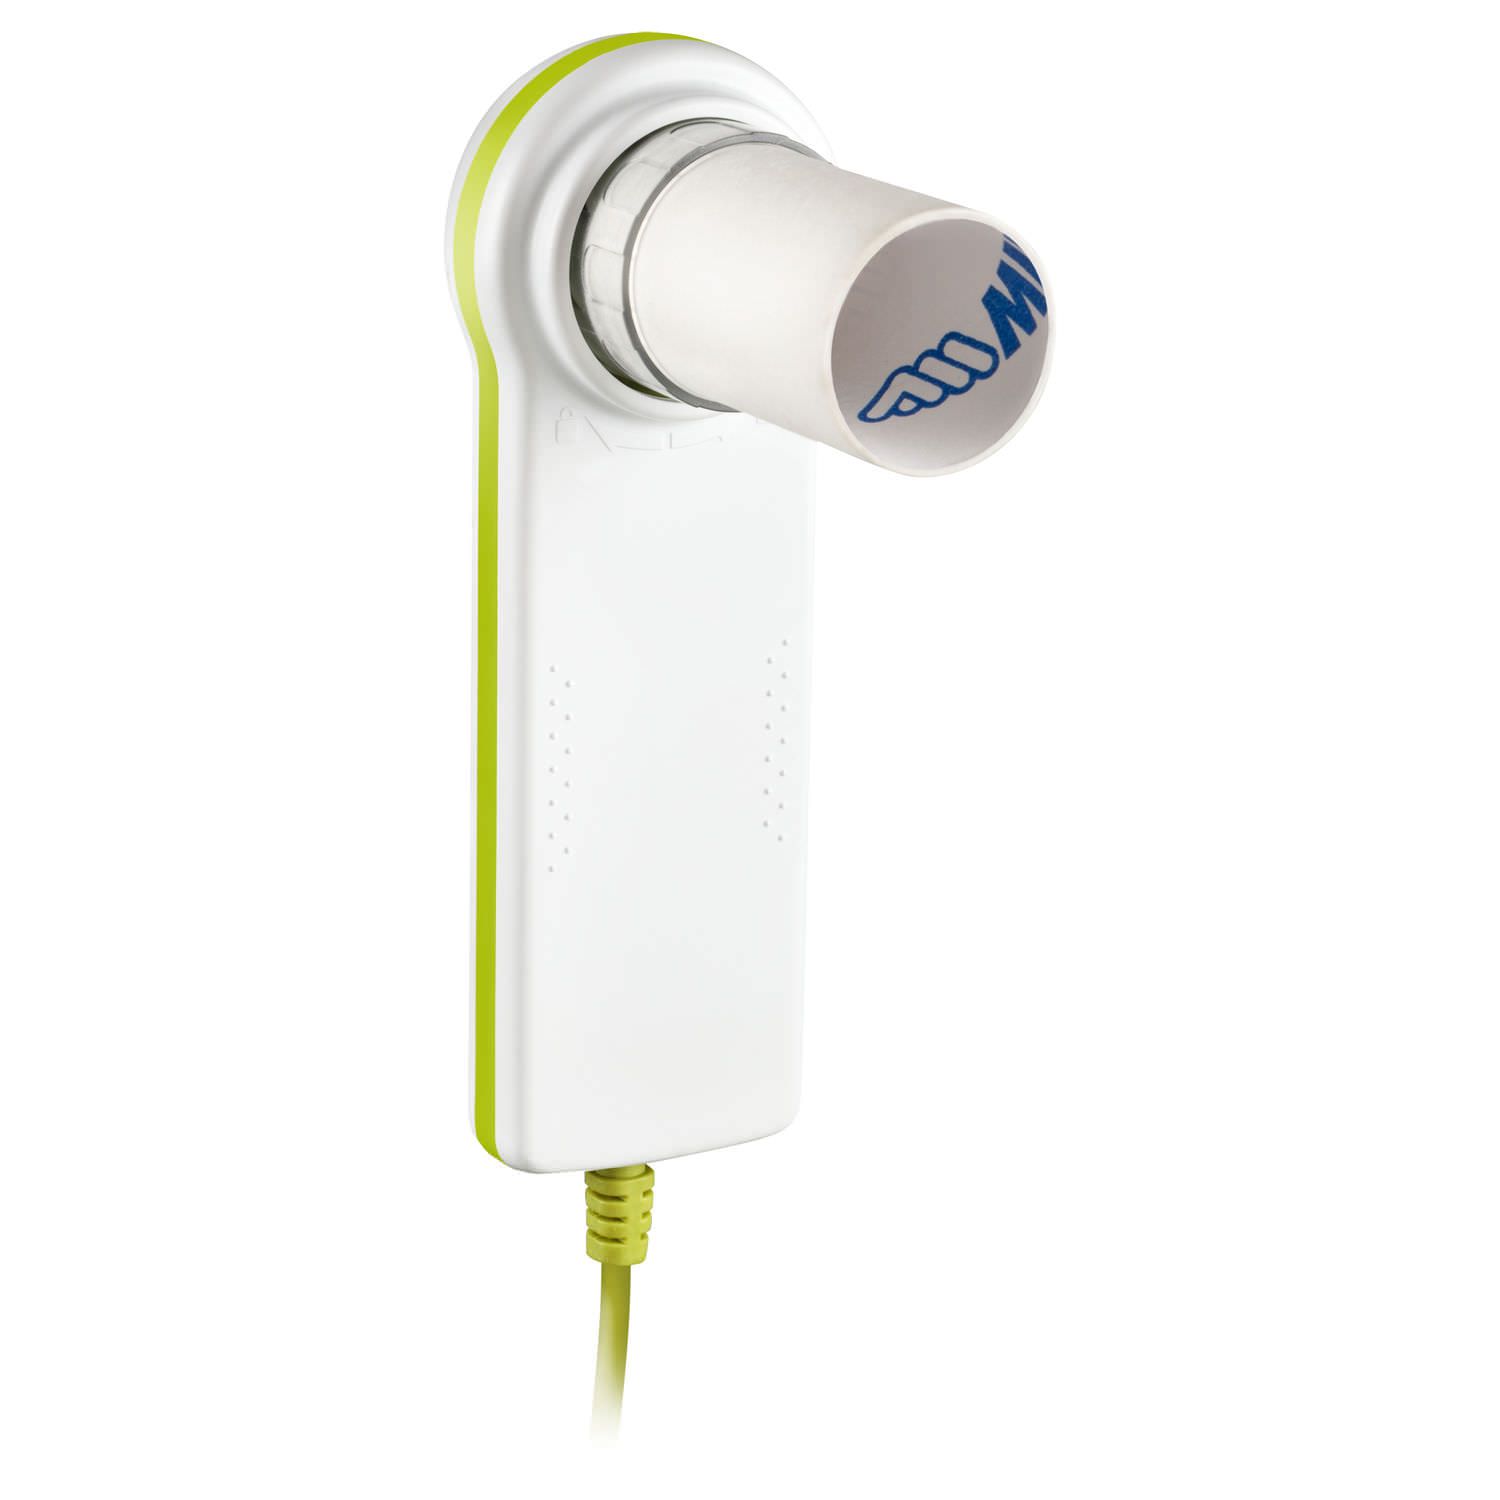 Computer-based spirometer / USB 16 L/s | Minispir ® Light MIR - Medical International Research